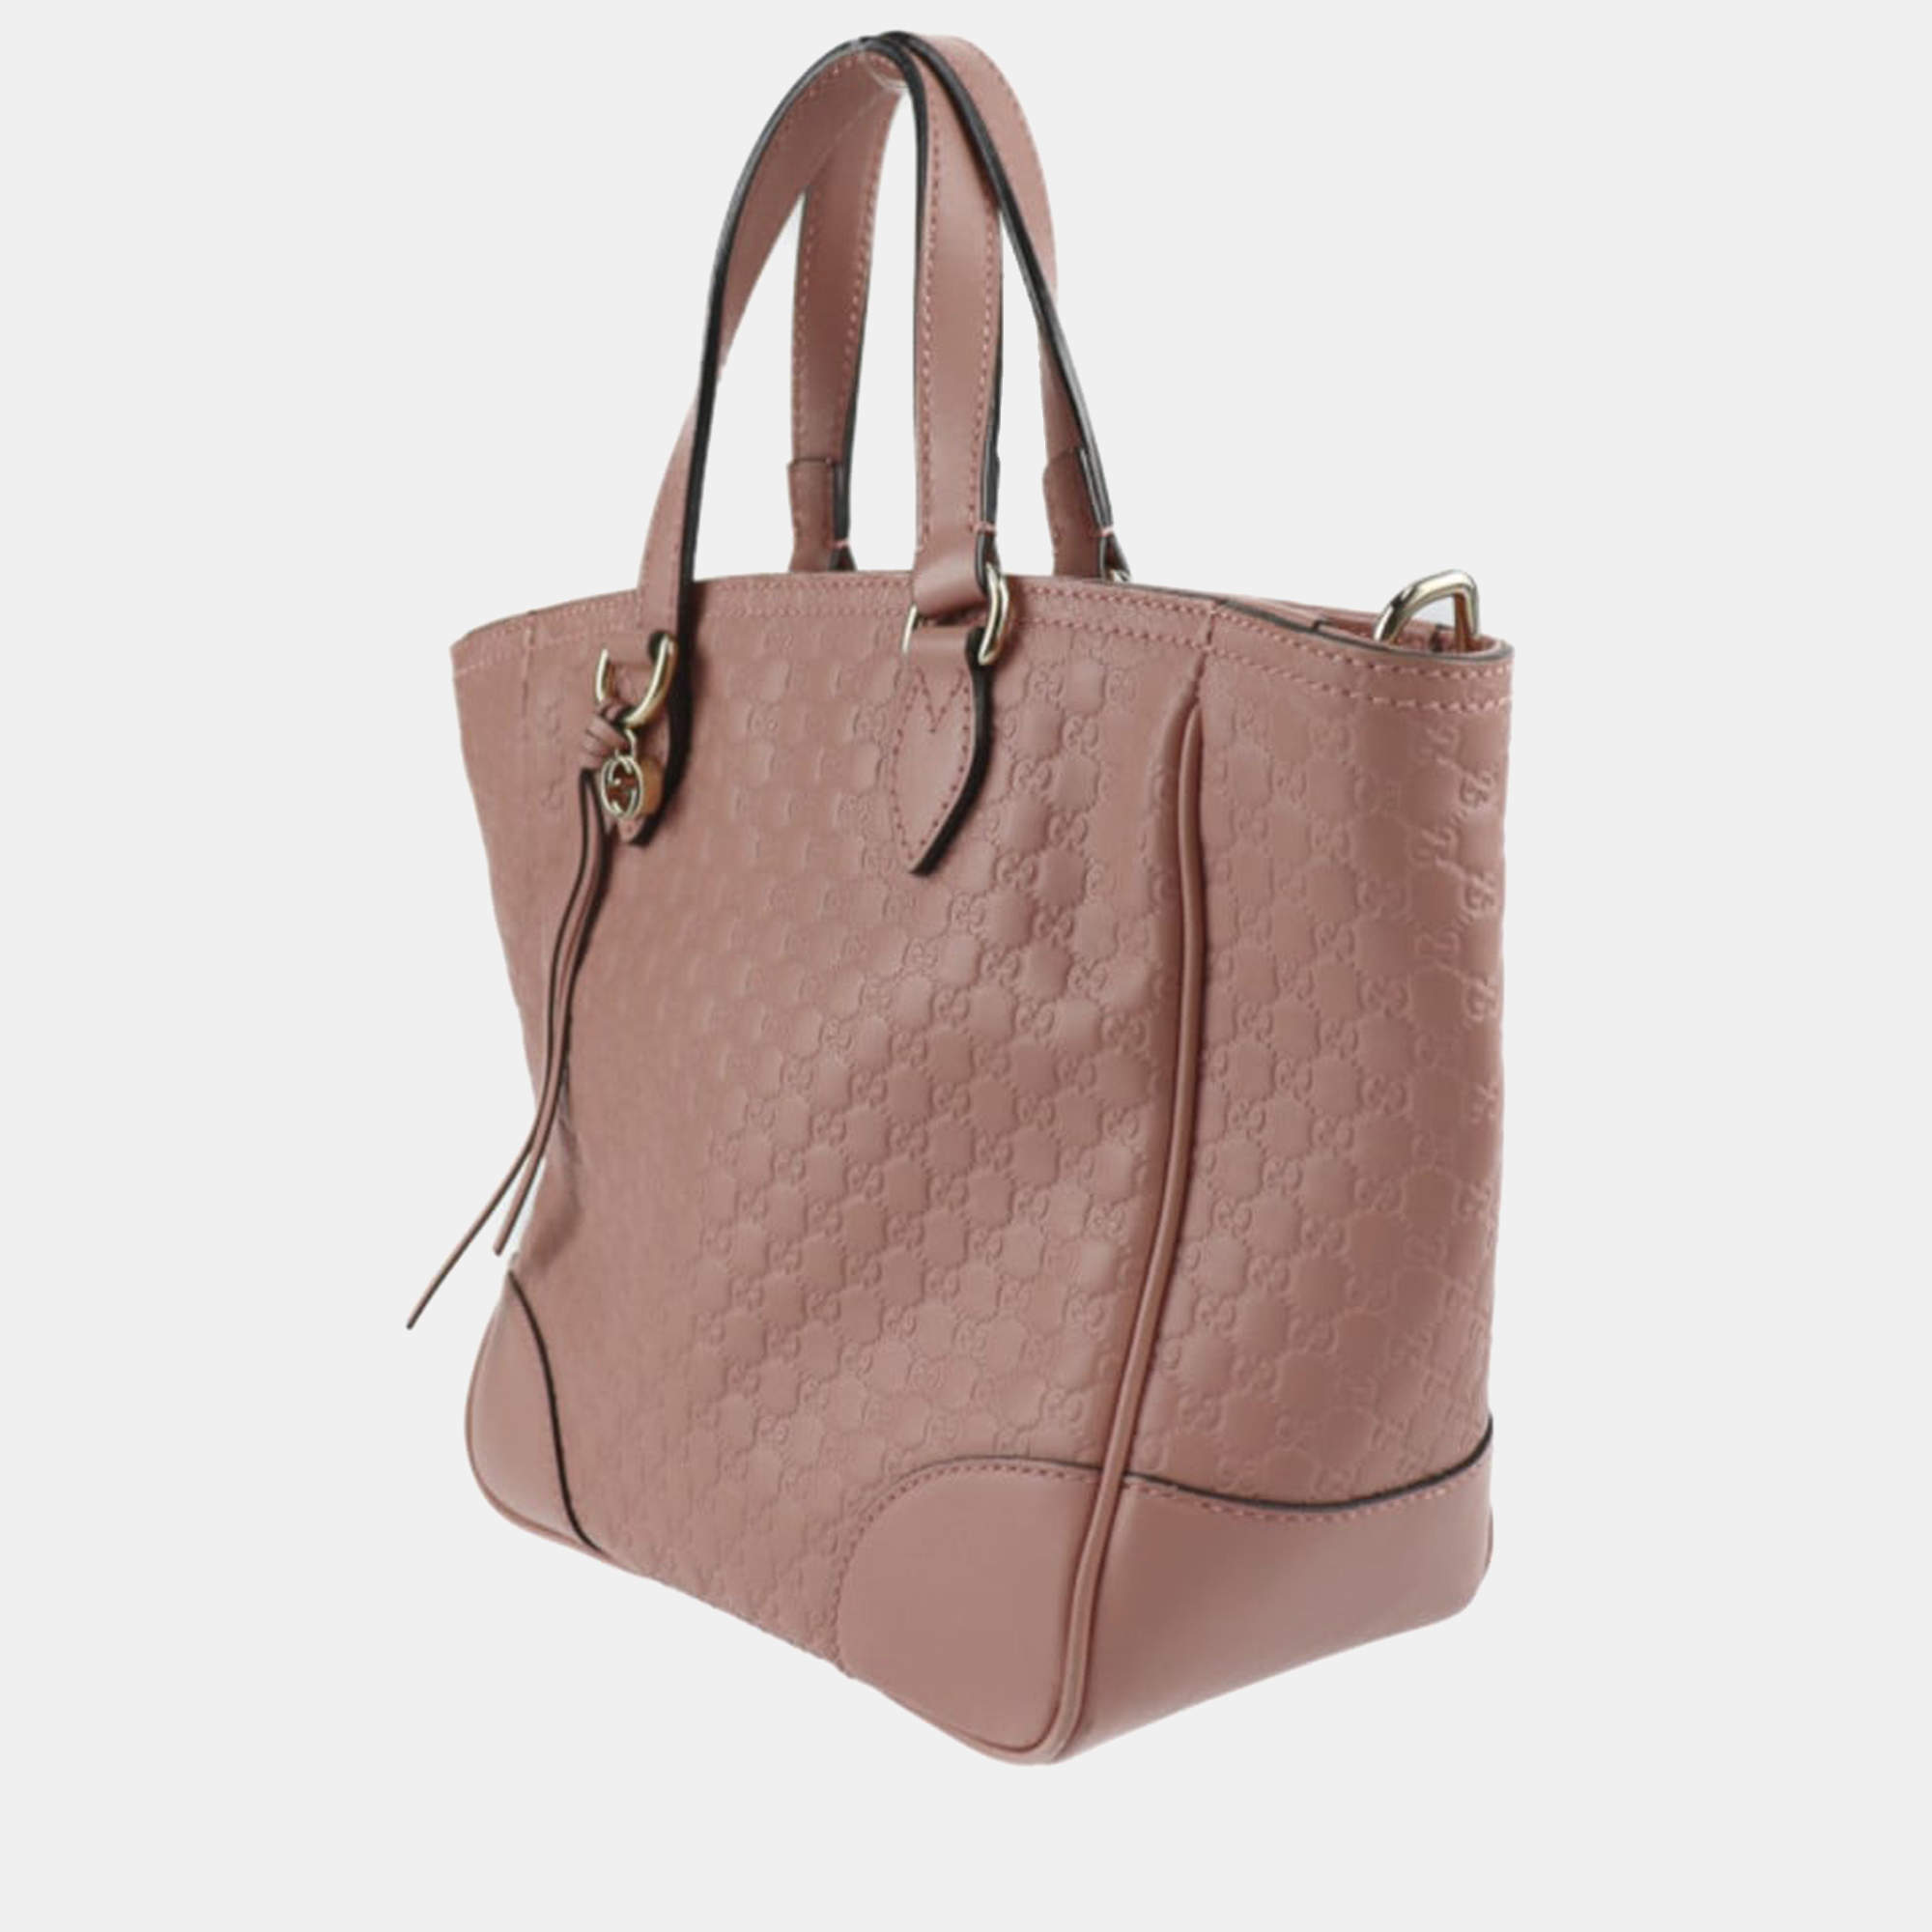 Gucci Guccissima Small Leather Tote Bag, Light Pink